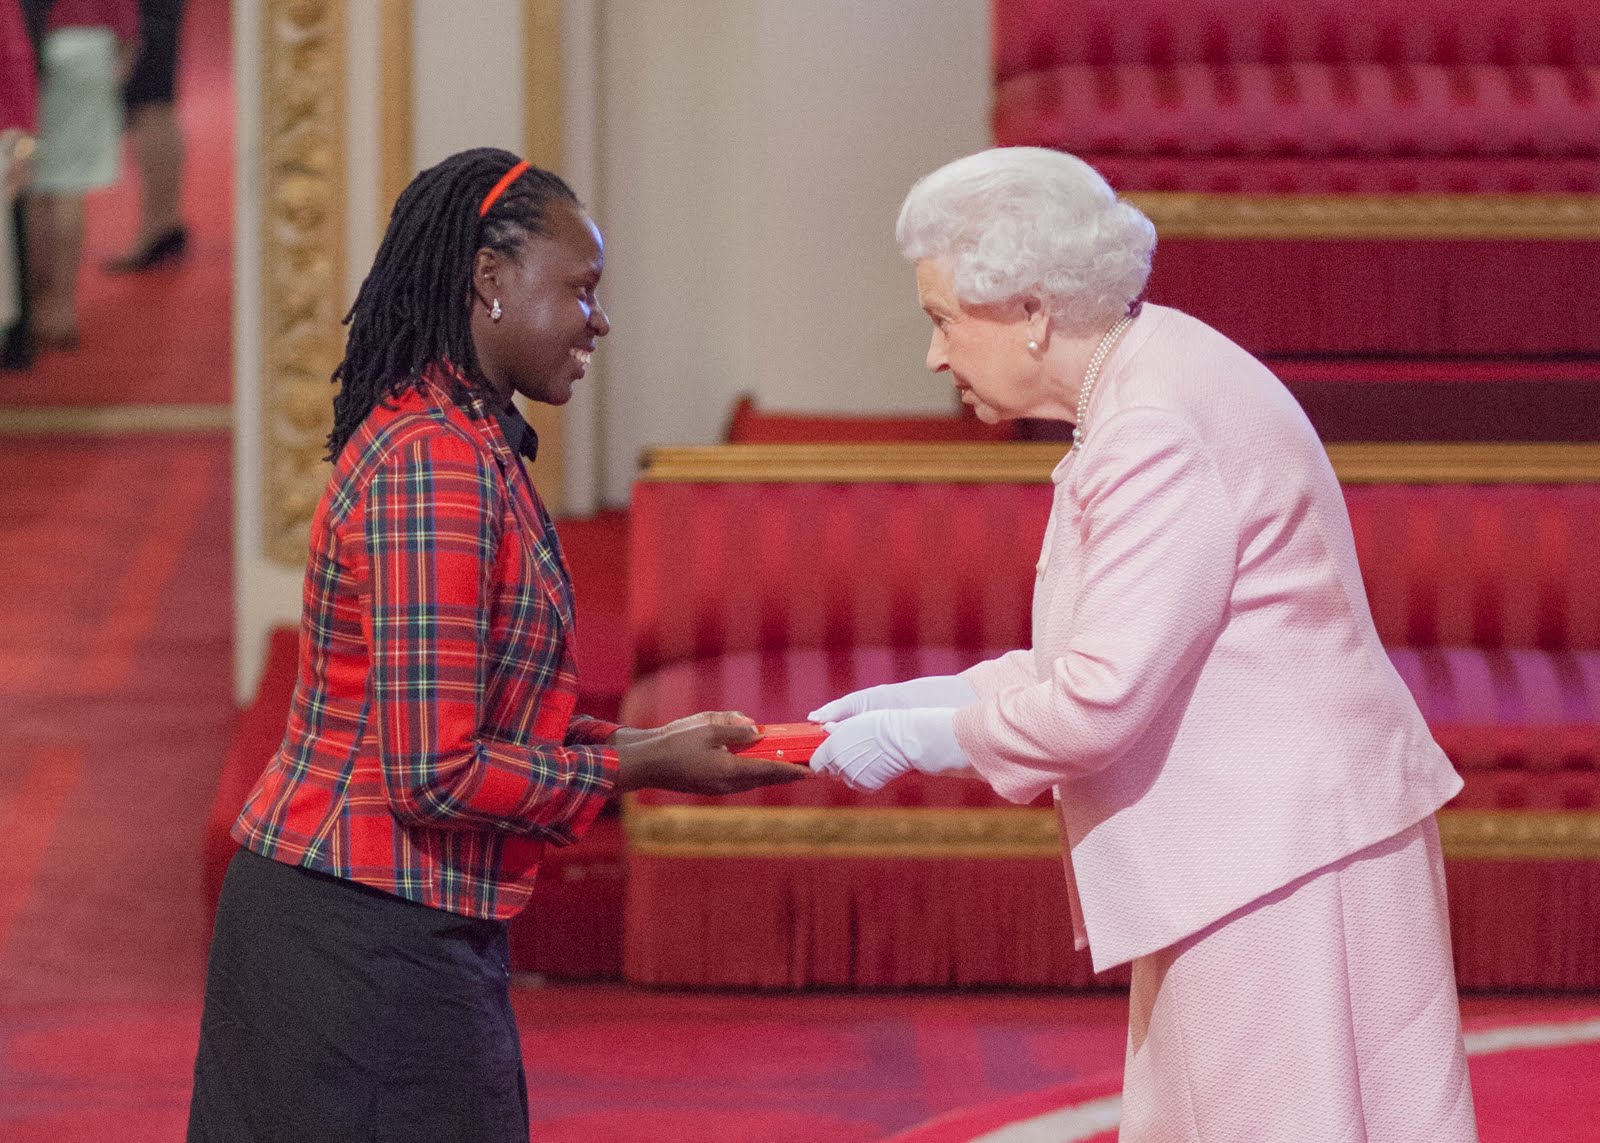 Diana Nakaweesa 2015 Queen's Young Leader from Uganda